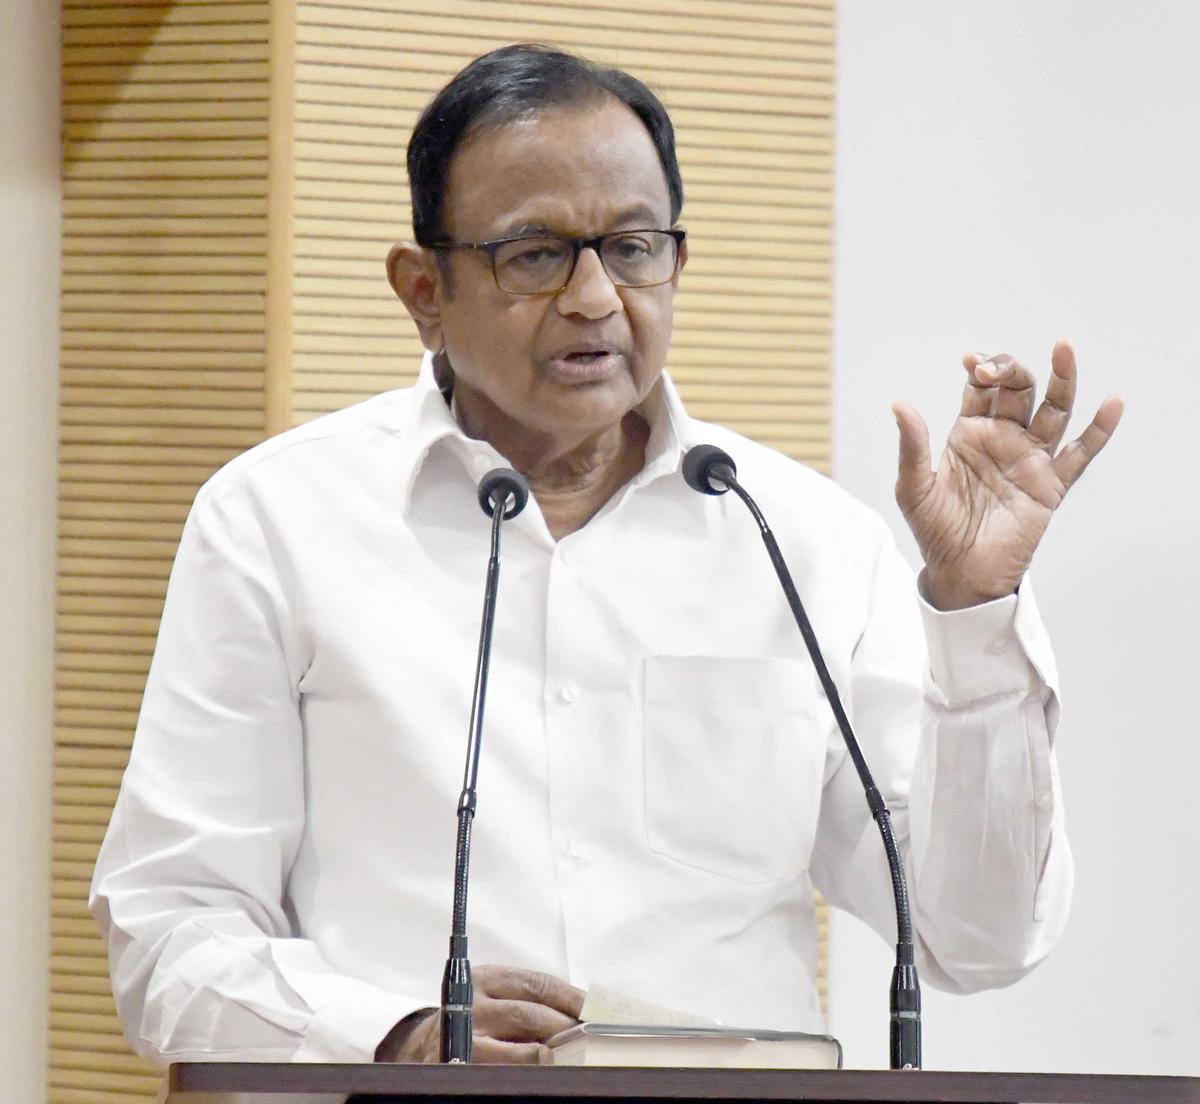 Govt. in denial of internal factors affecting economy: Chidambaram